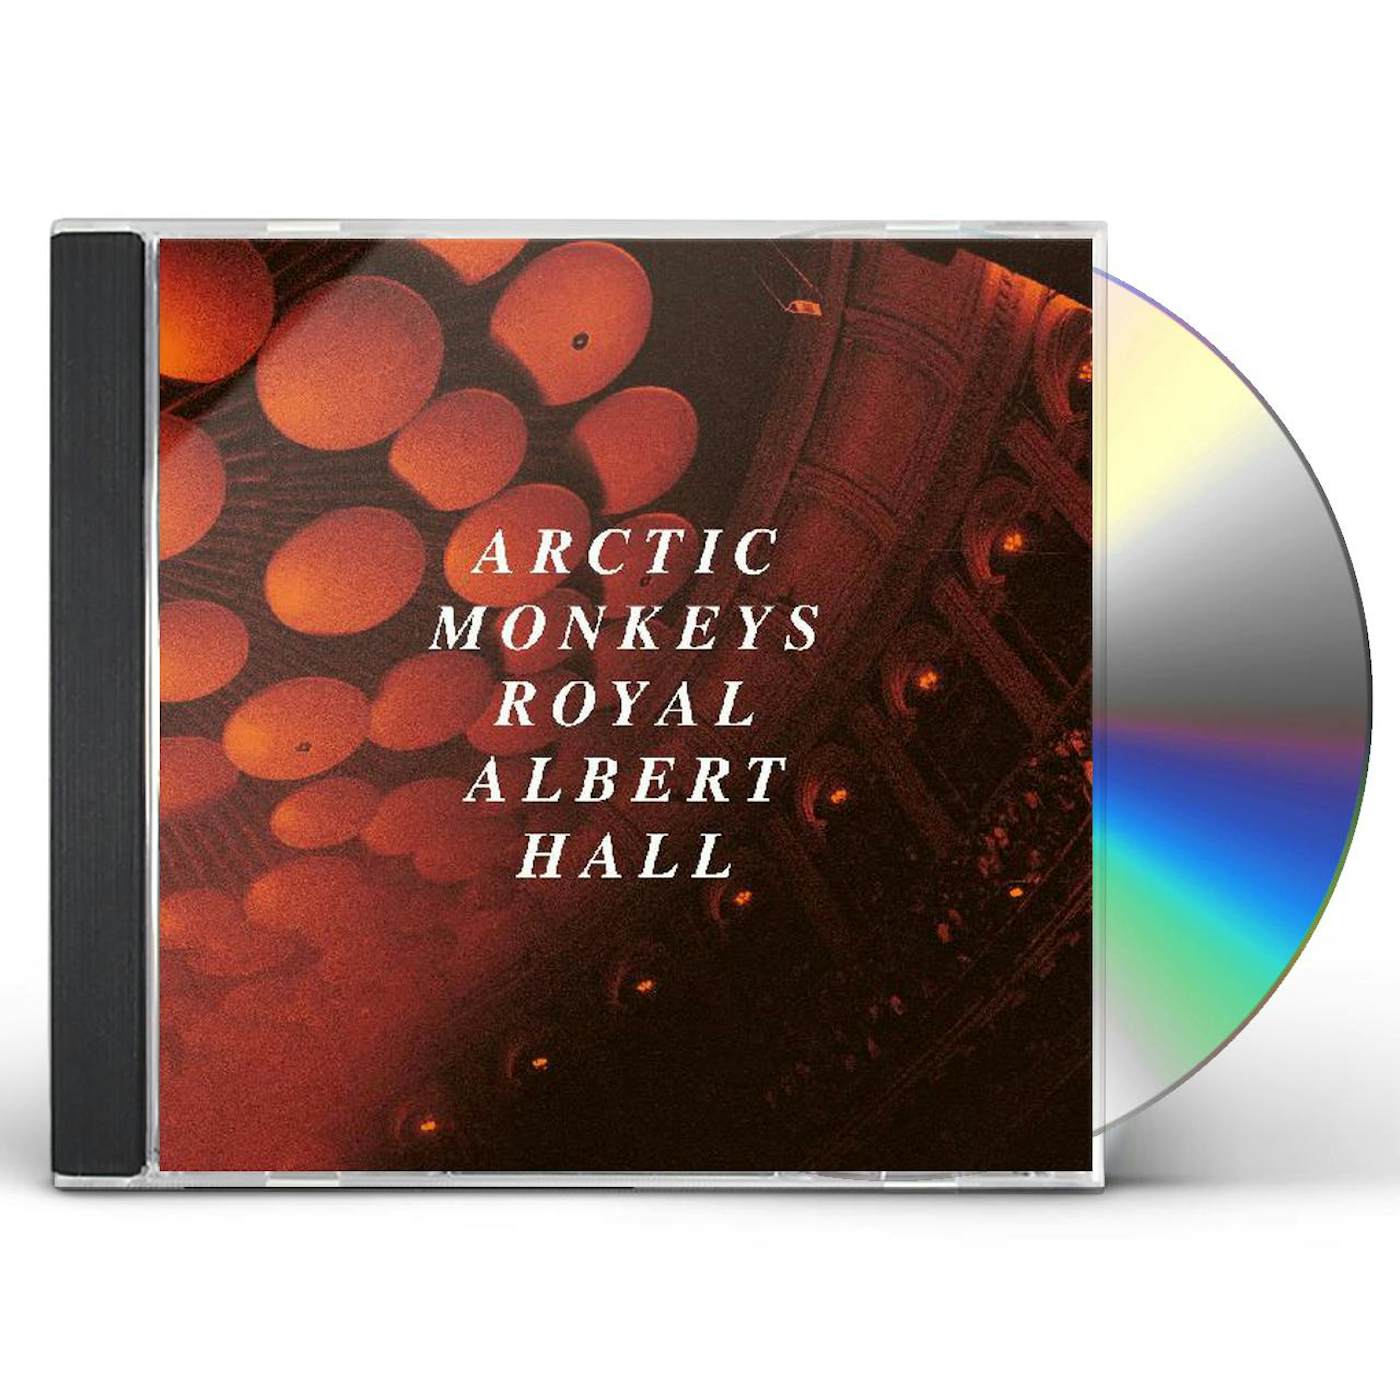 ARCTIC MONKEYS LIVE AT THE ROYAL ALBERT HALL CD